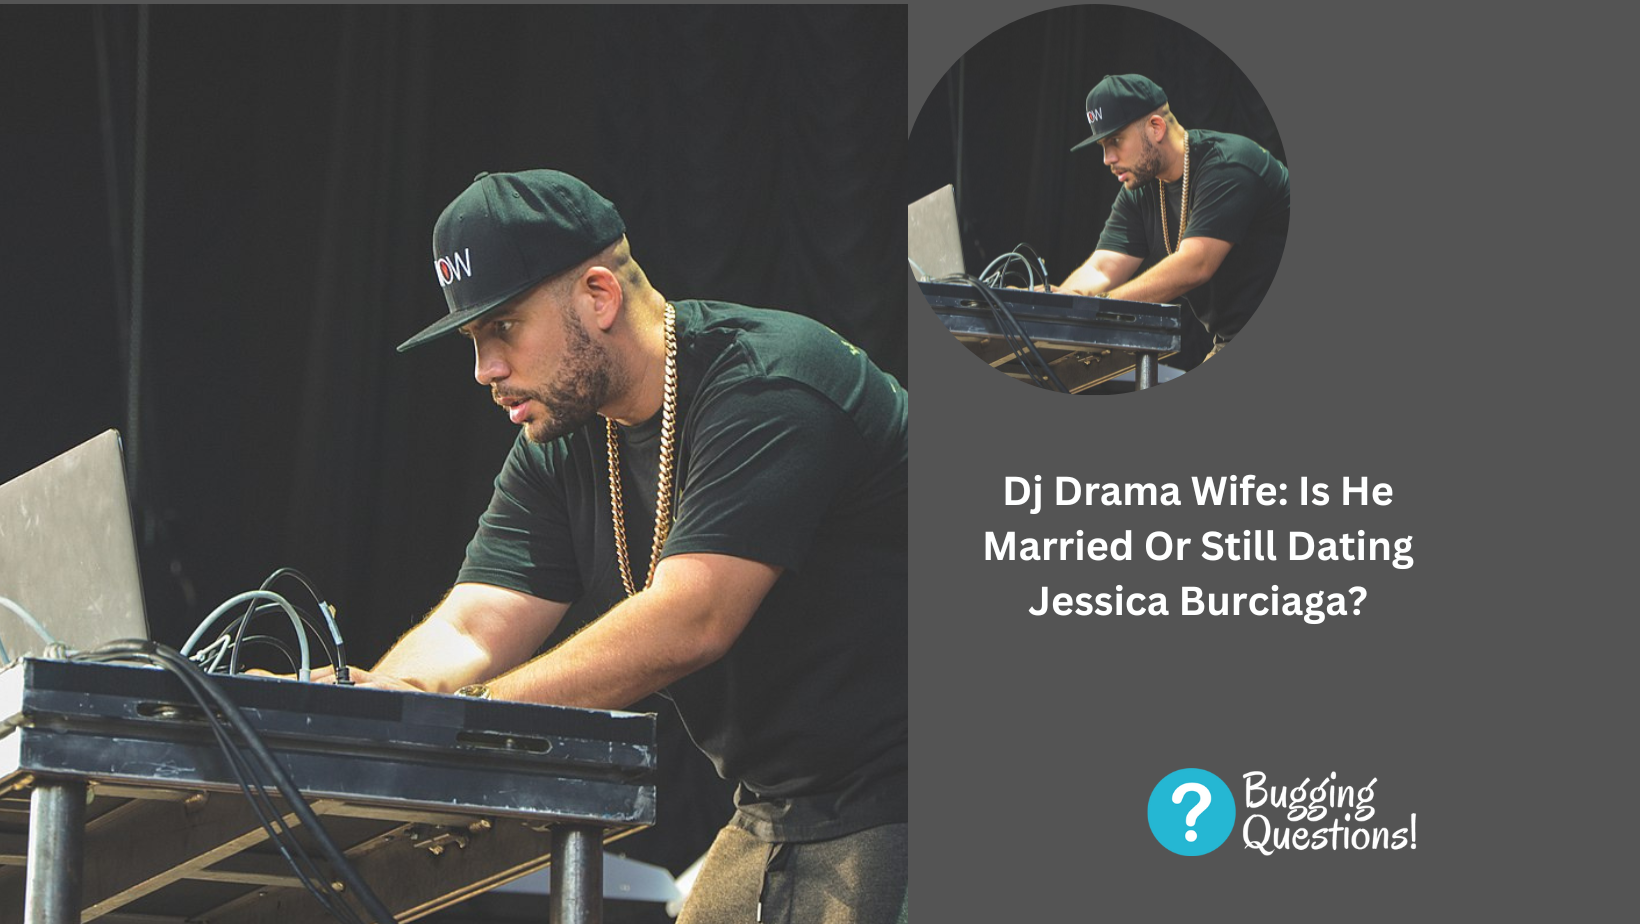 Dj Drama Wife: Is He Married Or Still Dating Jessica Burciaga?